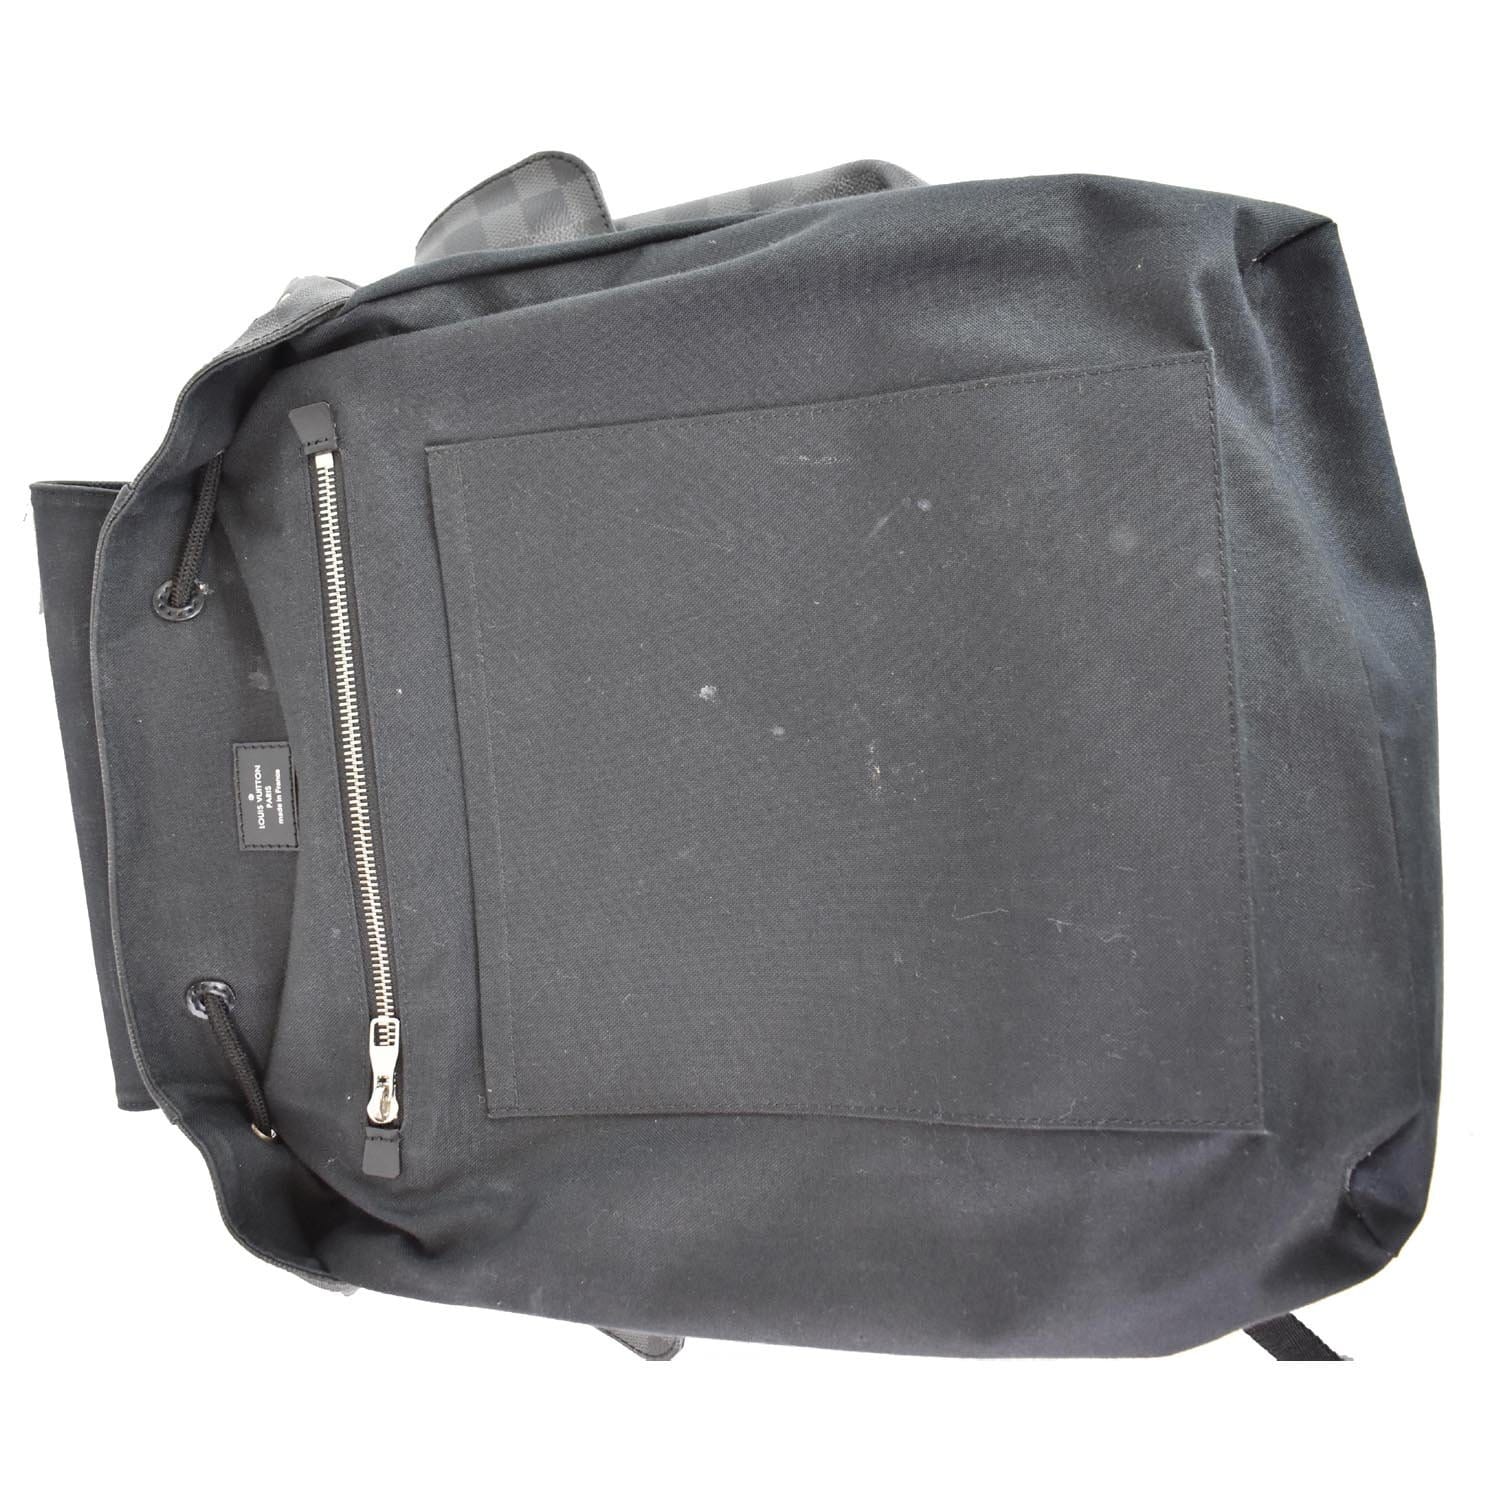 LV christopher pm damier graphite backpack N41379